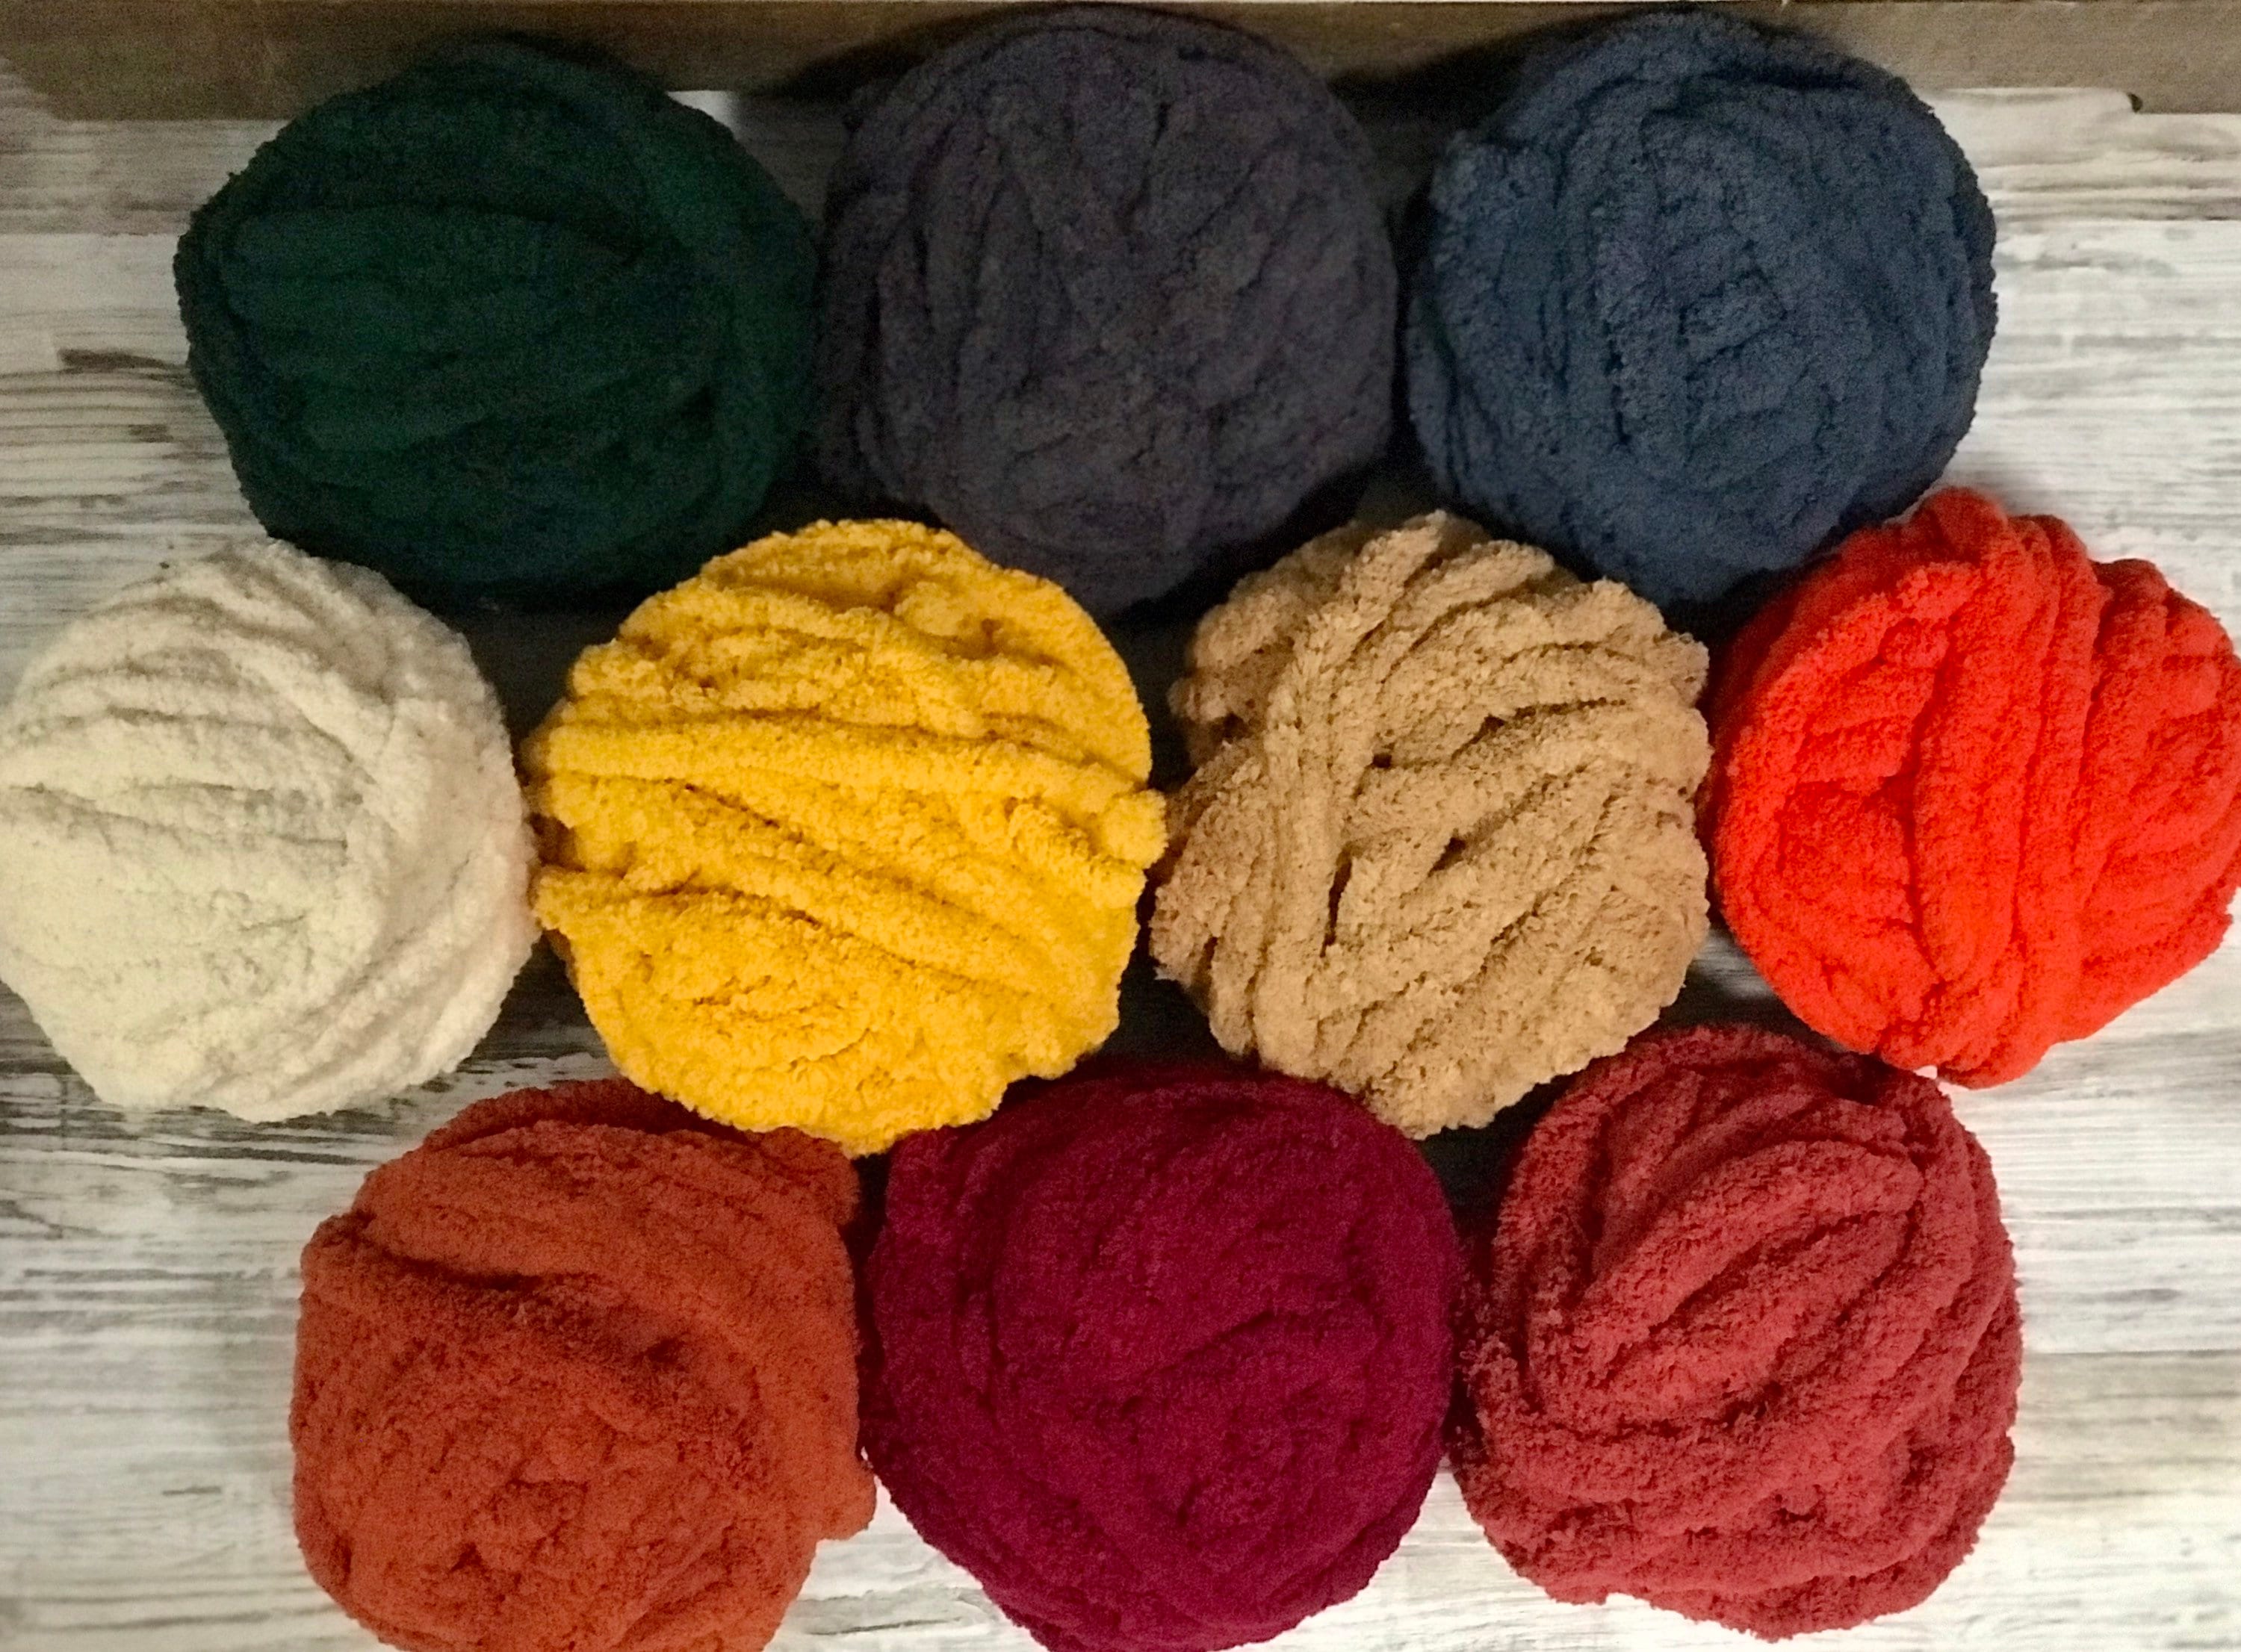 Zarela Baby Fluffy Yarn Wool 25g 13 Orange 